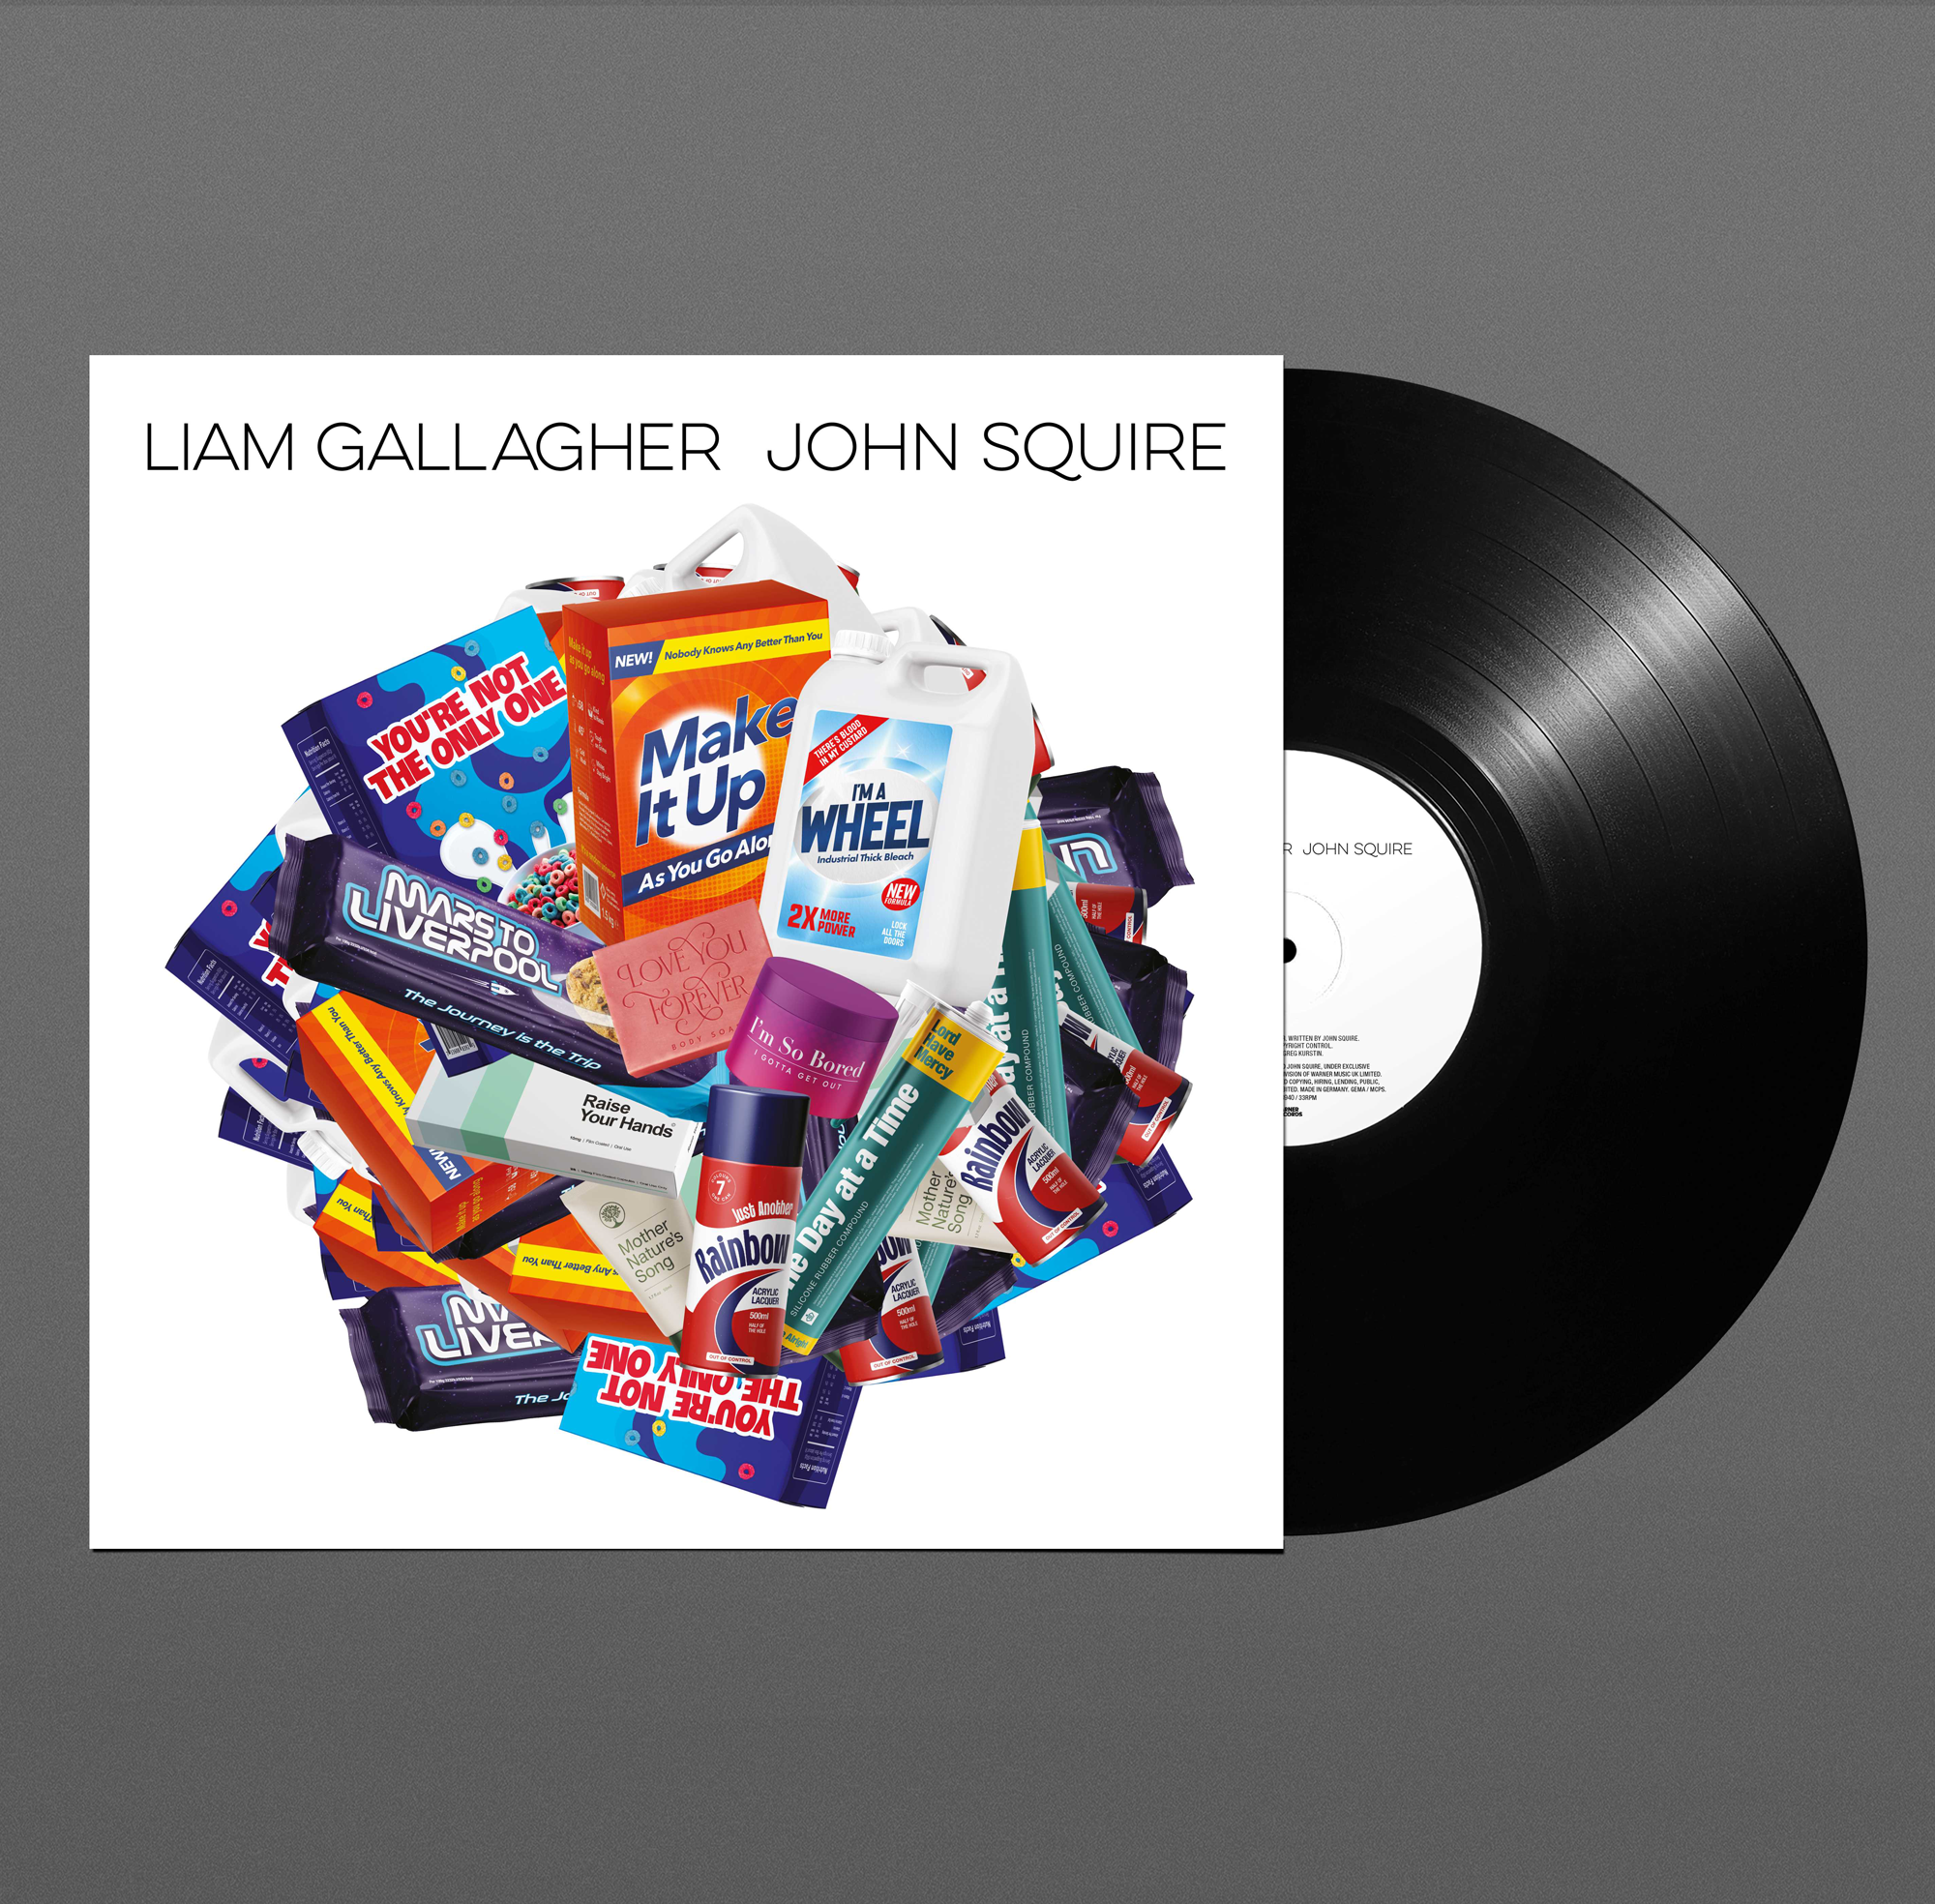 Liam Gallagher, John Squire - Liam Gallagher John Squire: Vinyl LP